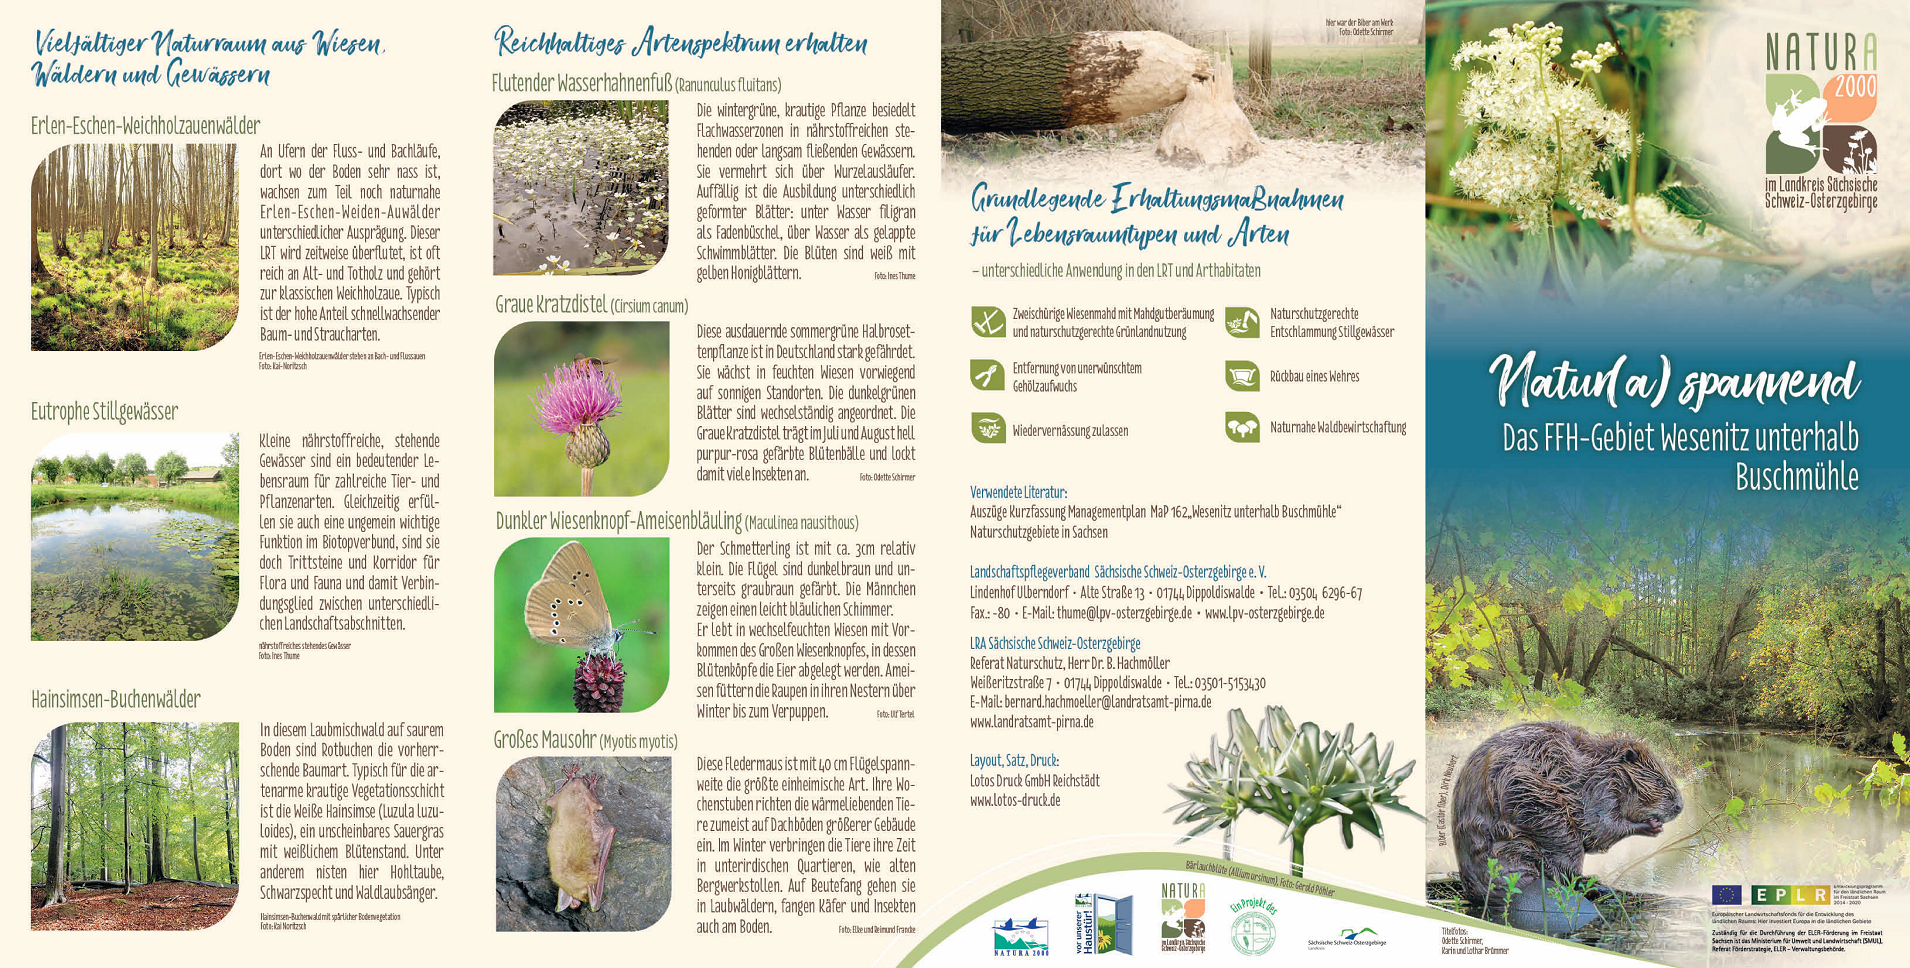 tl_files/downloads/Bilder Projekte/Projektstellen/Natura 2000 1.0/Flyer/FFH-Gebiet_Wesenitztal_1.png